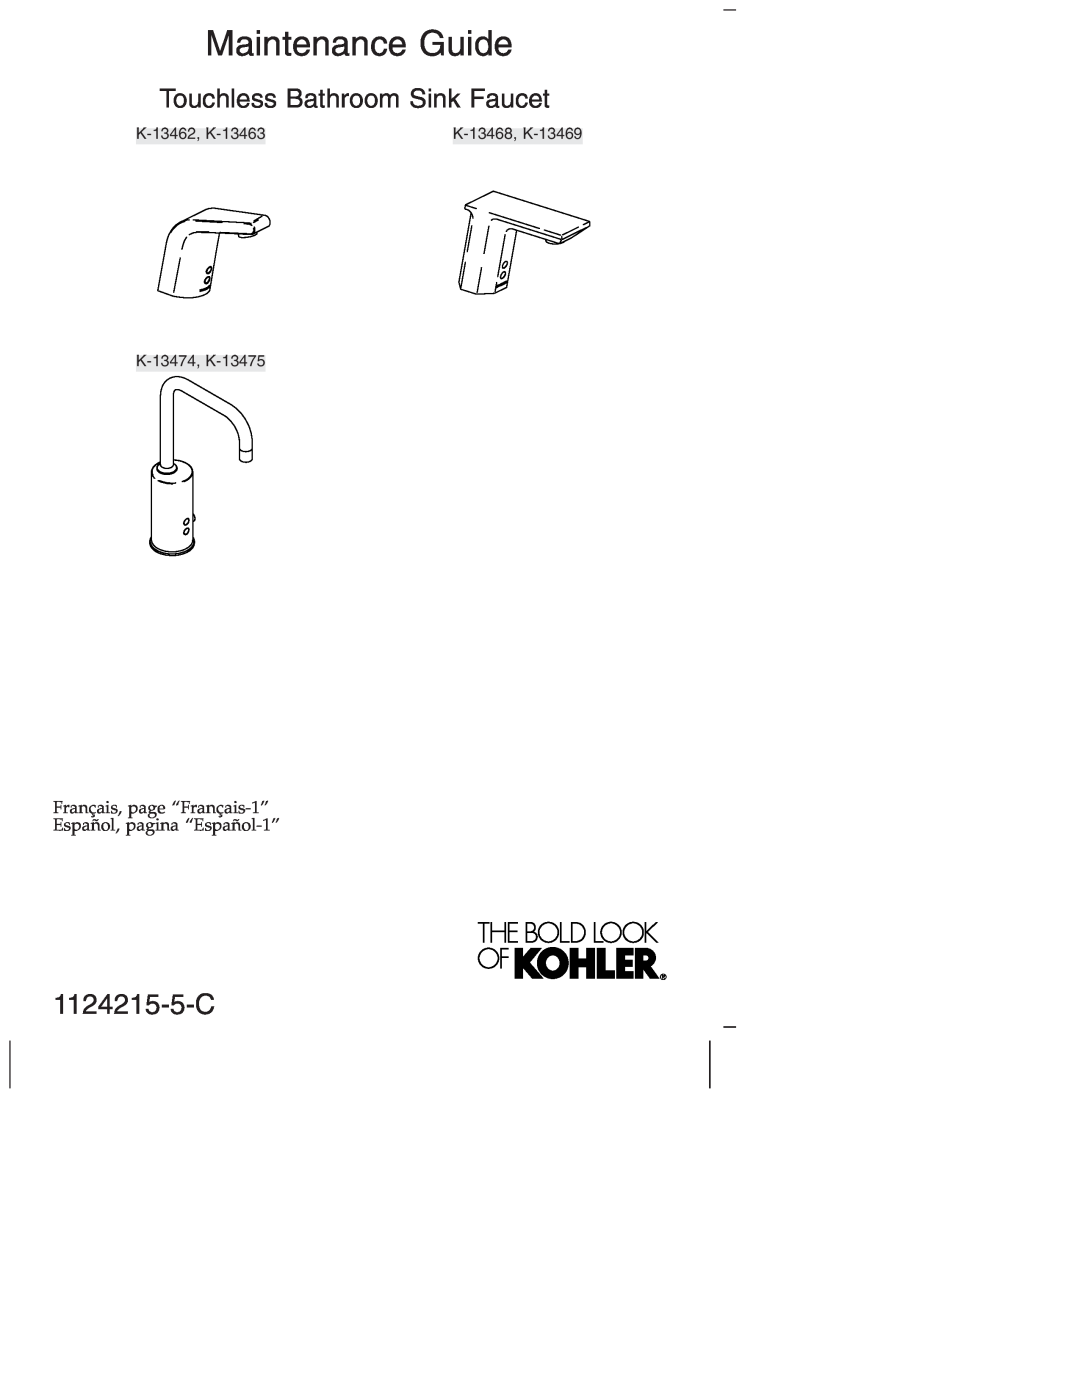 Kohler K-1461, K-1375, K-1433, K-1460, K-1492, K-1368, K-1170 manual Installation Guide, Drop-InBath Whirlpool, 1019749-2-H 